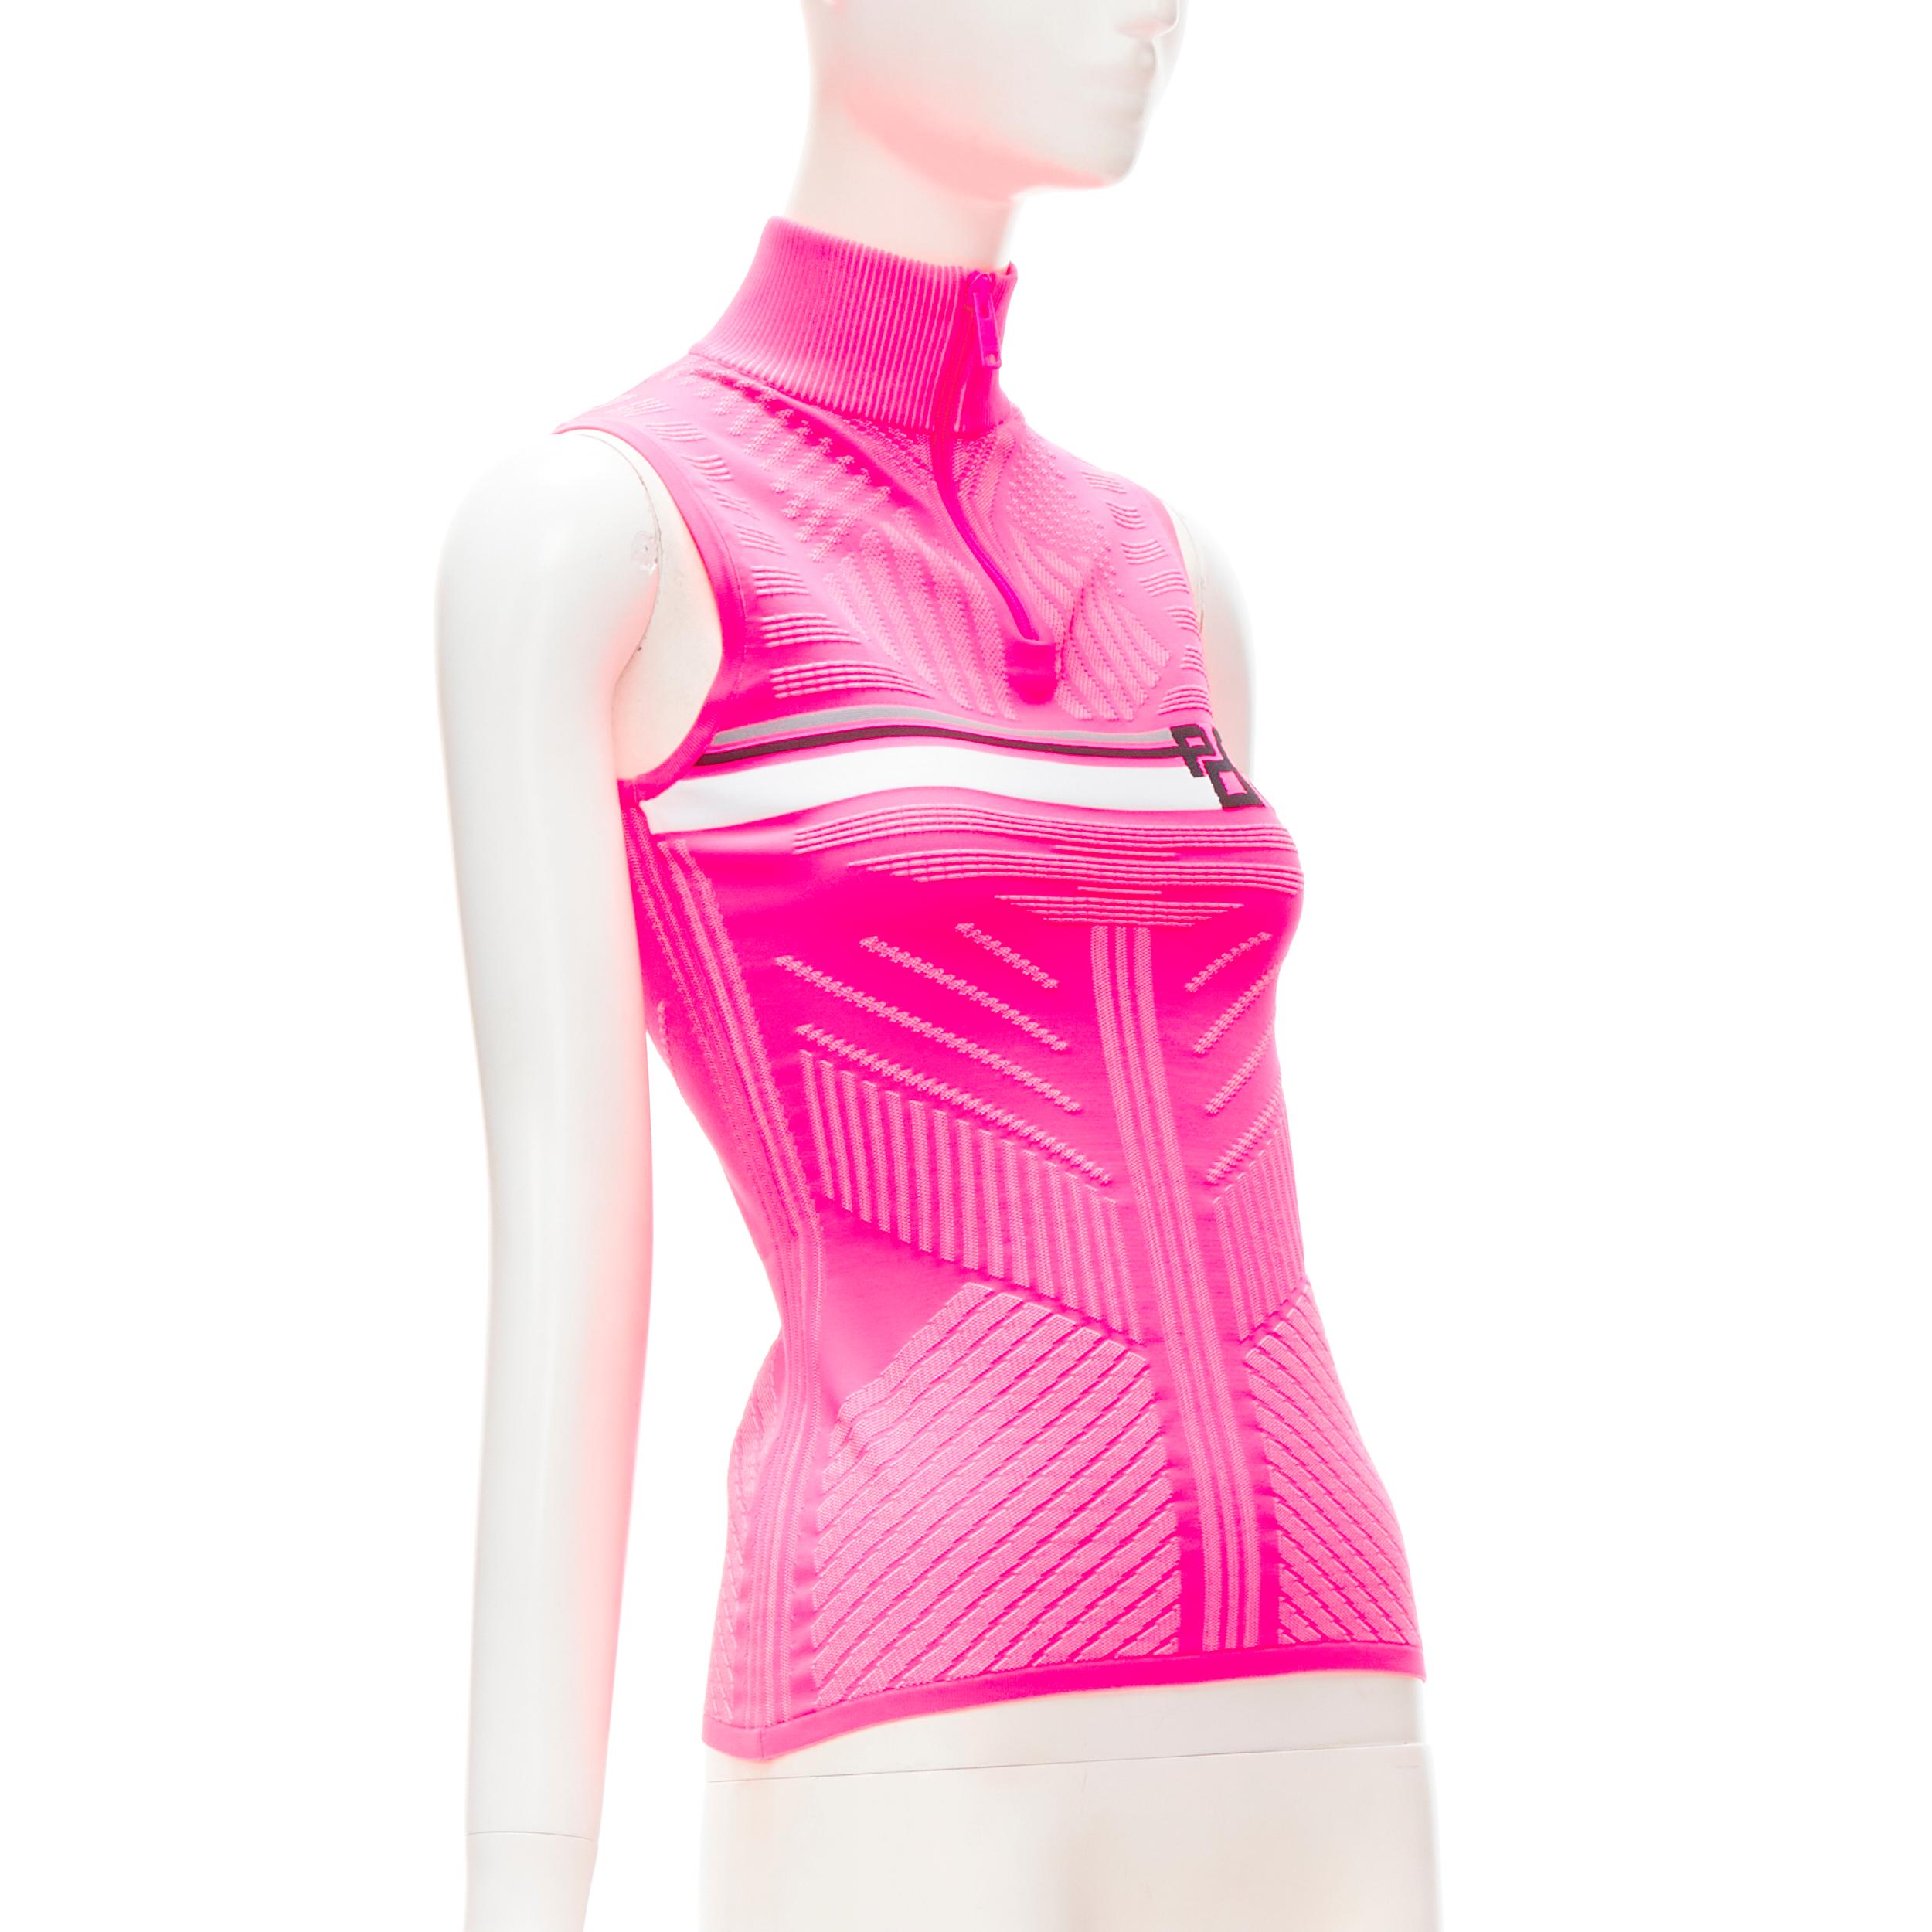 PRADA 2018 pink graphic Racing Sports Logo bodycon zip up top XS
Brand: Prada
Designer: Miuccia Prada
Collection: Fall Winter 2018 
Color: Pink
Pattern: Solid
Closure: Zip
Extra Detail: Half zip collar. Prada logo on zip pull. Intarsia bodycon